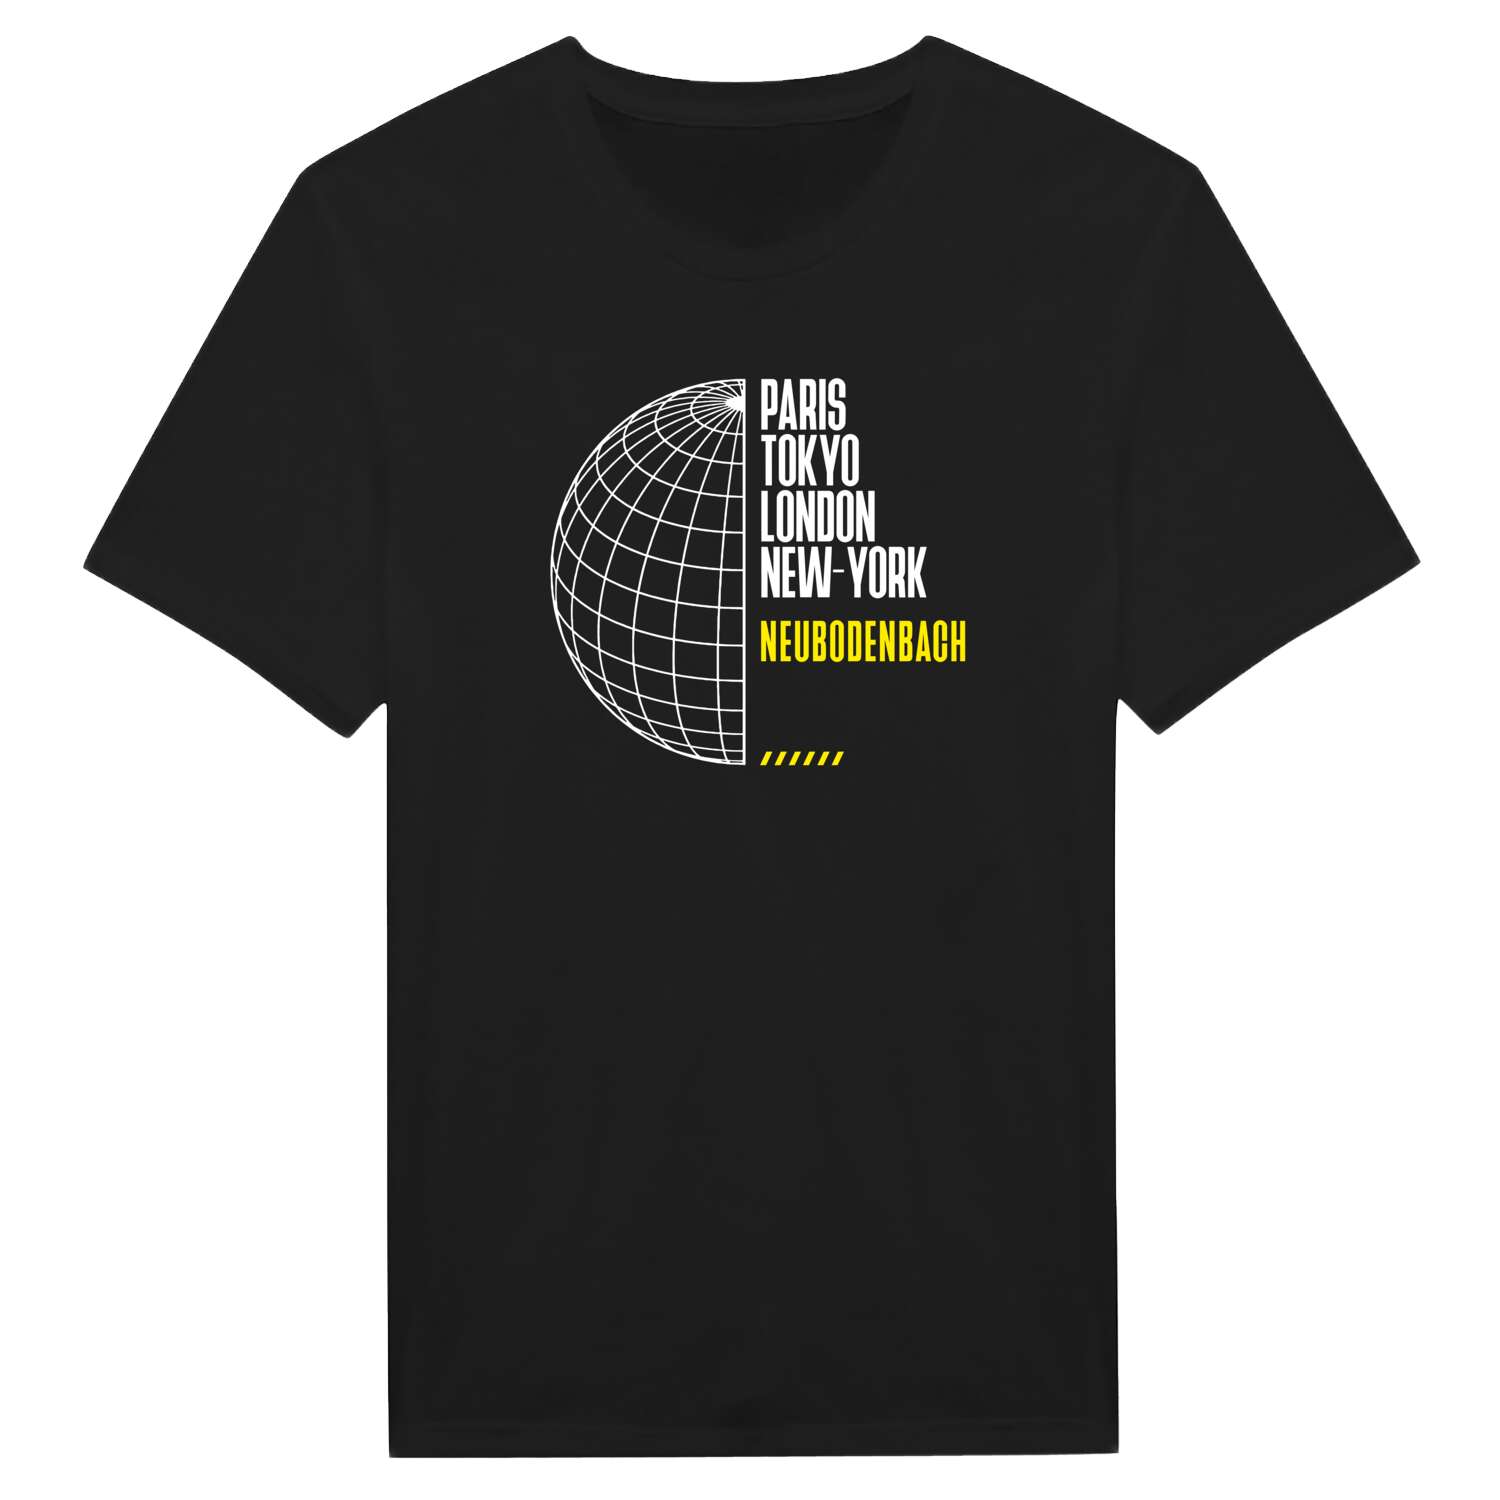 Neubodenbach T-Shirt »Paris Tokyo London«